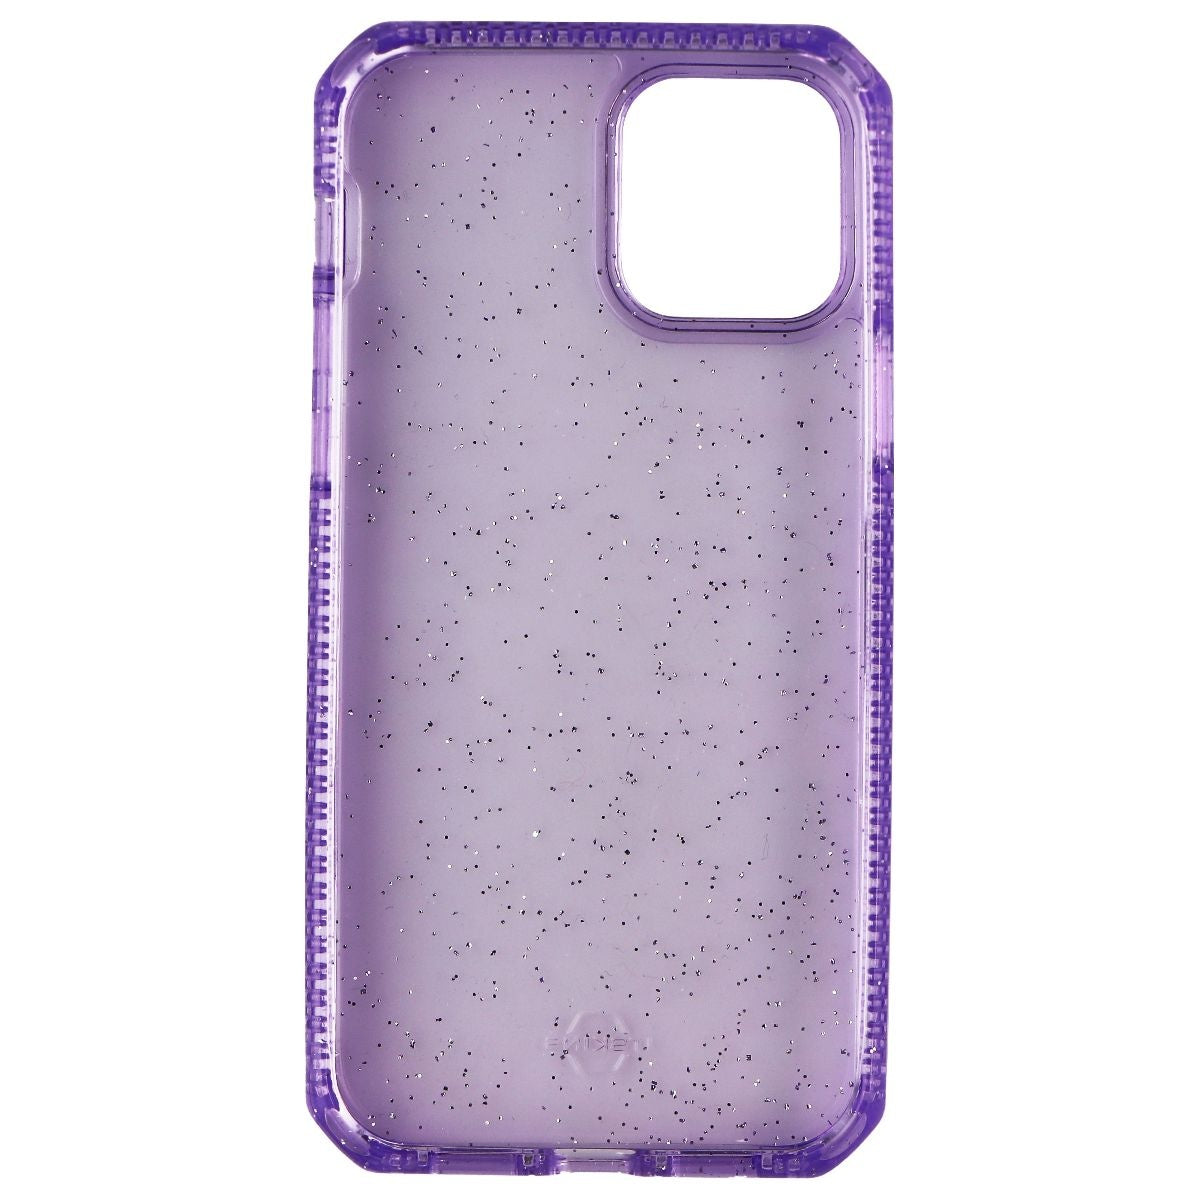 ITSKINS Hybrid Spark 5G Case for Apple iPhone 12/12 Pro - Light Purple Cell Phone - Cases, Covers & Skins ITSKINS    - Simple Cell Bulk Wholesale Pricing - USA Seller